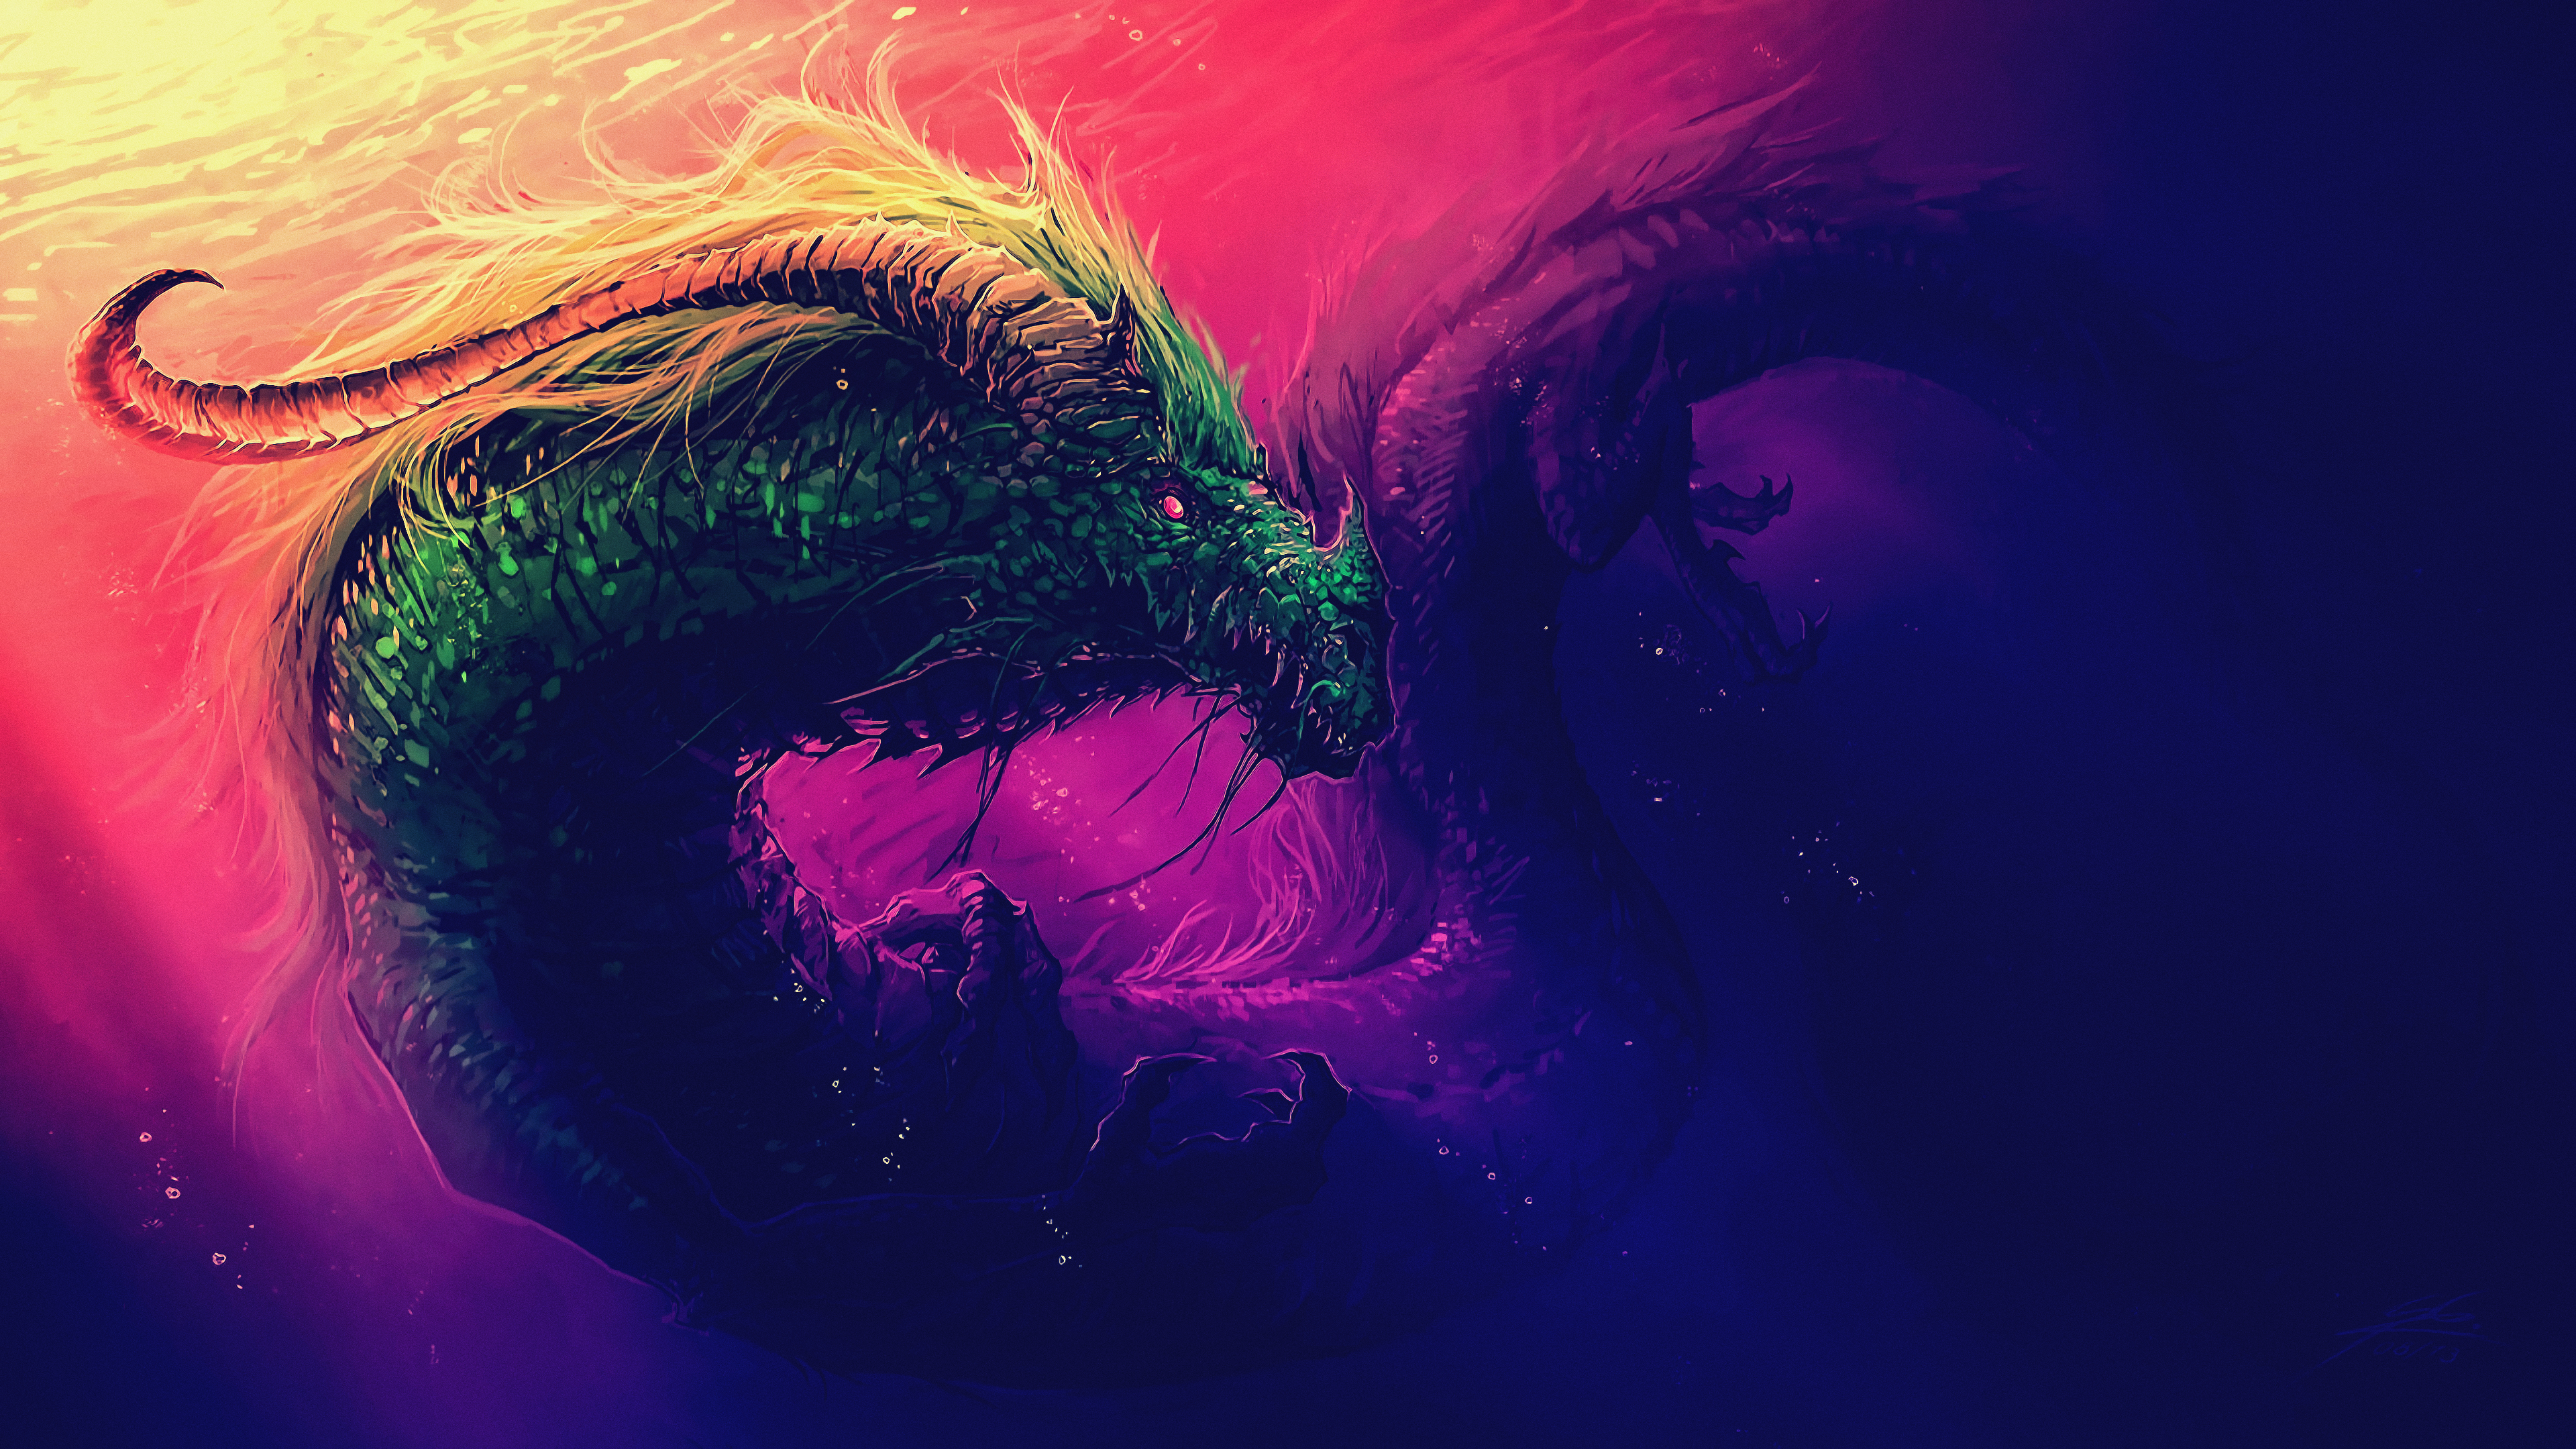 4K Fantasy Dragon Wallpaper and Background Image